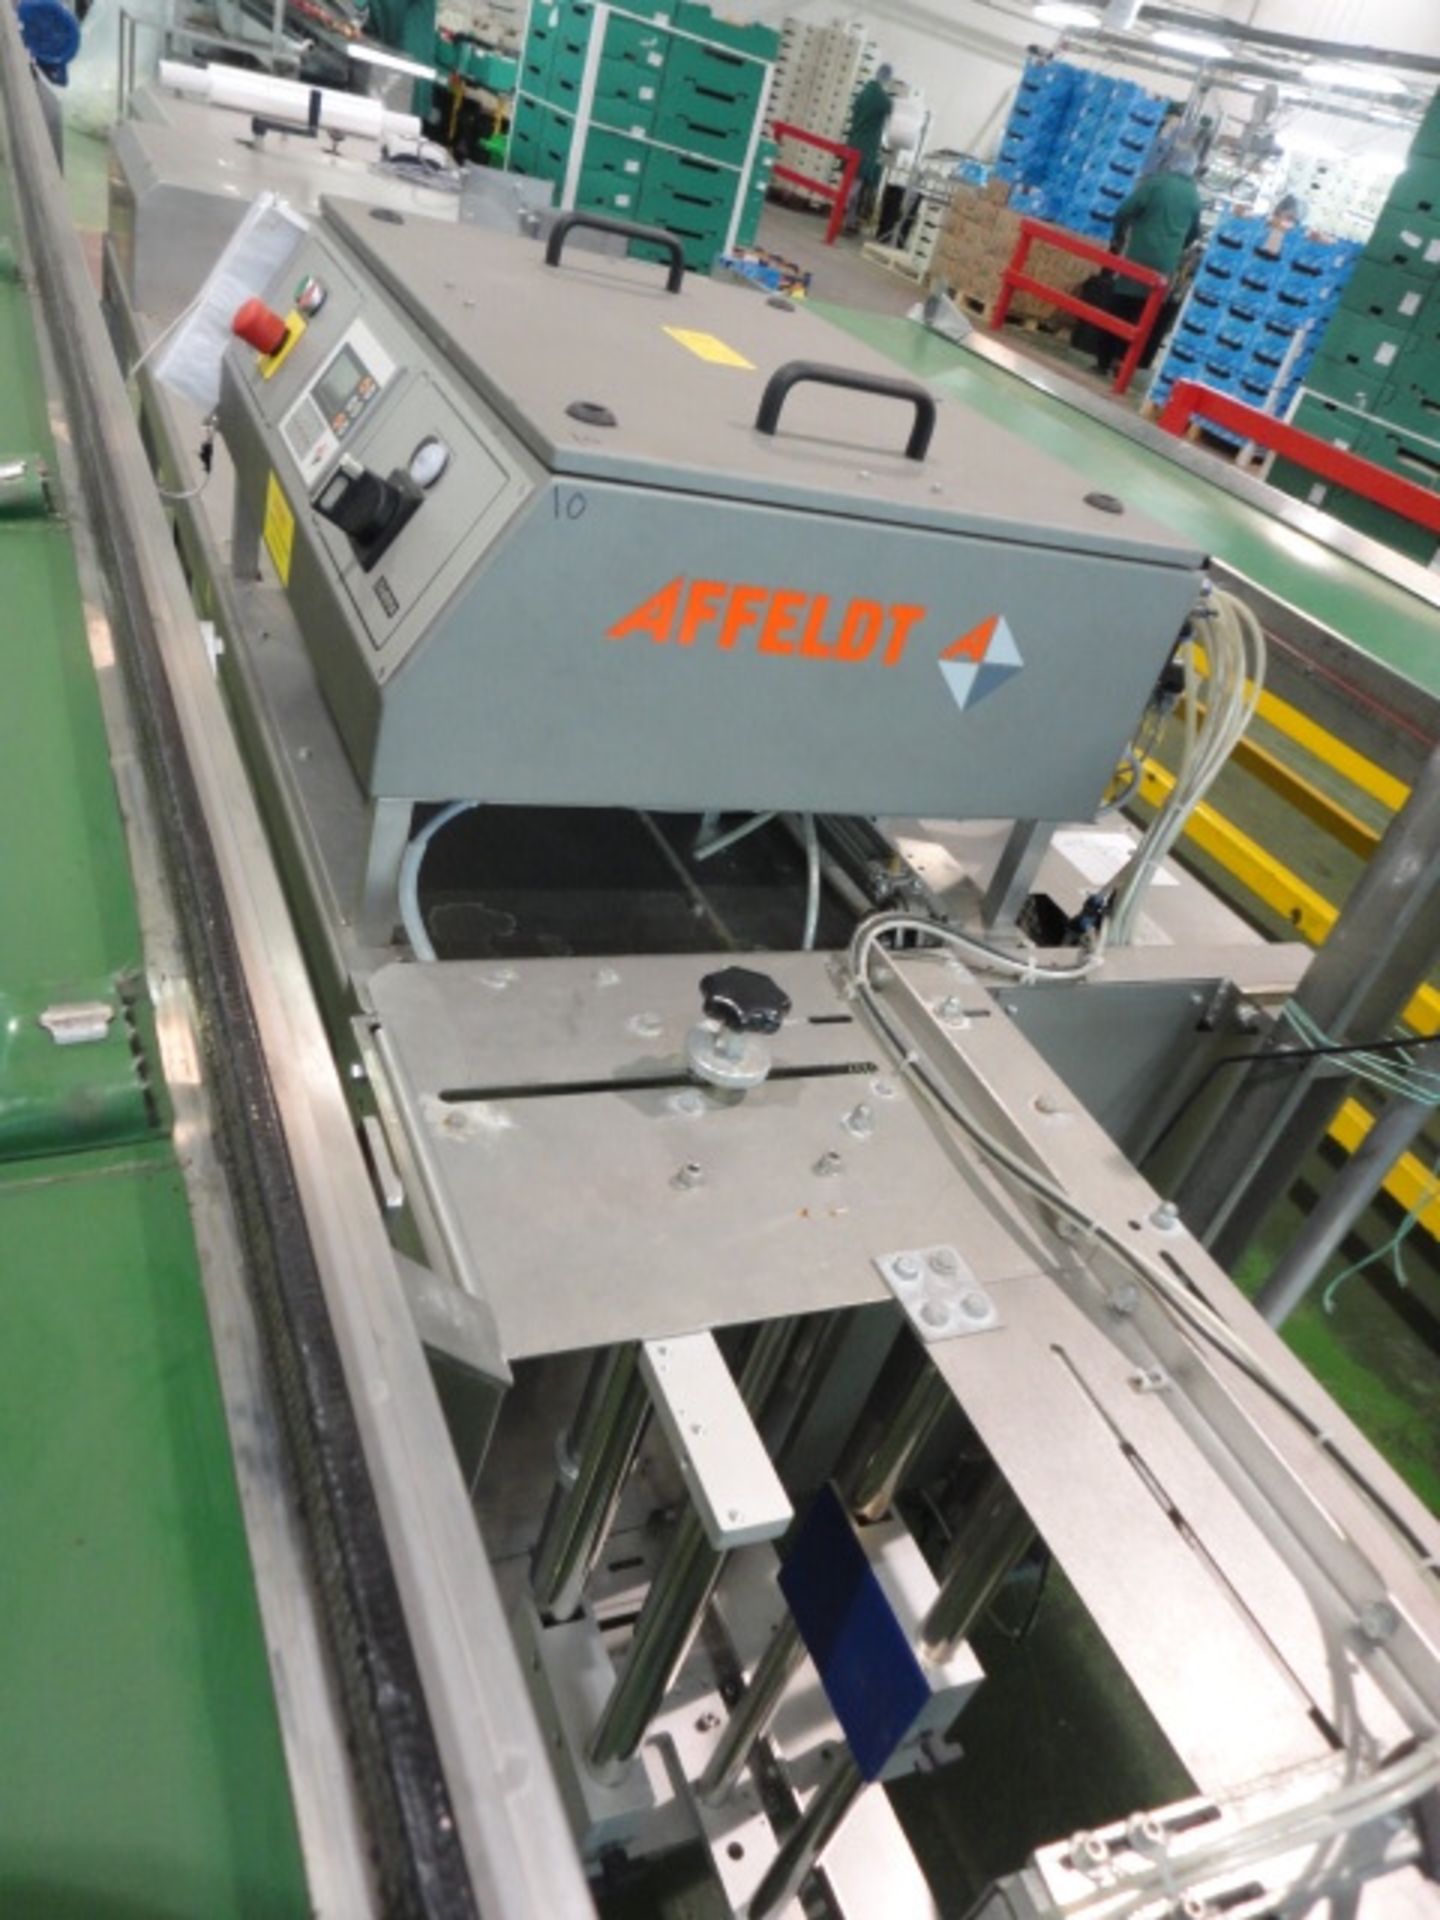 Affeldt model AVN 691 apple bagging machine with infeed conveyor approx. 4150mm long x 170mm wide